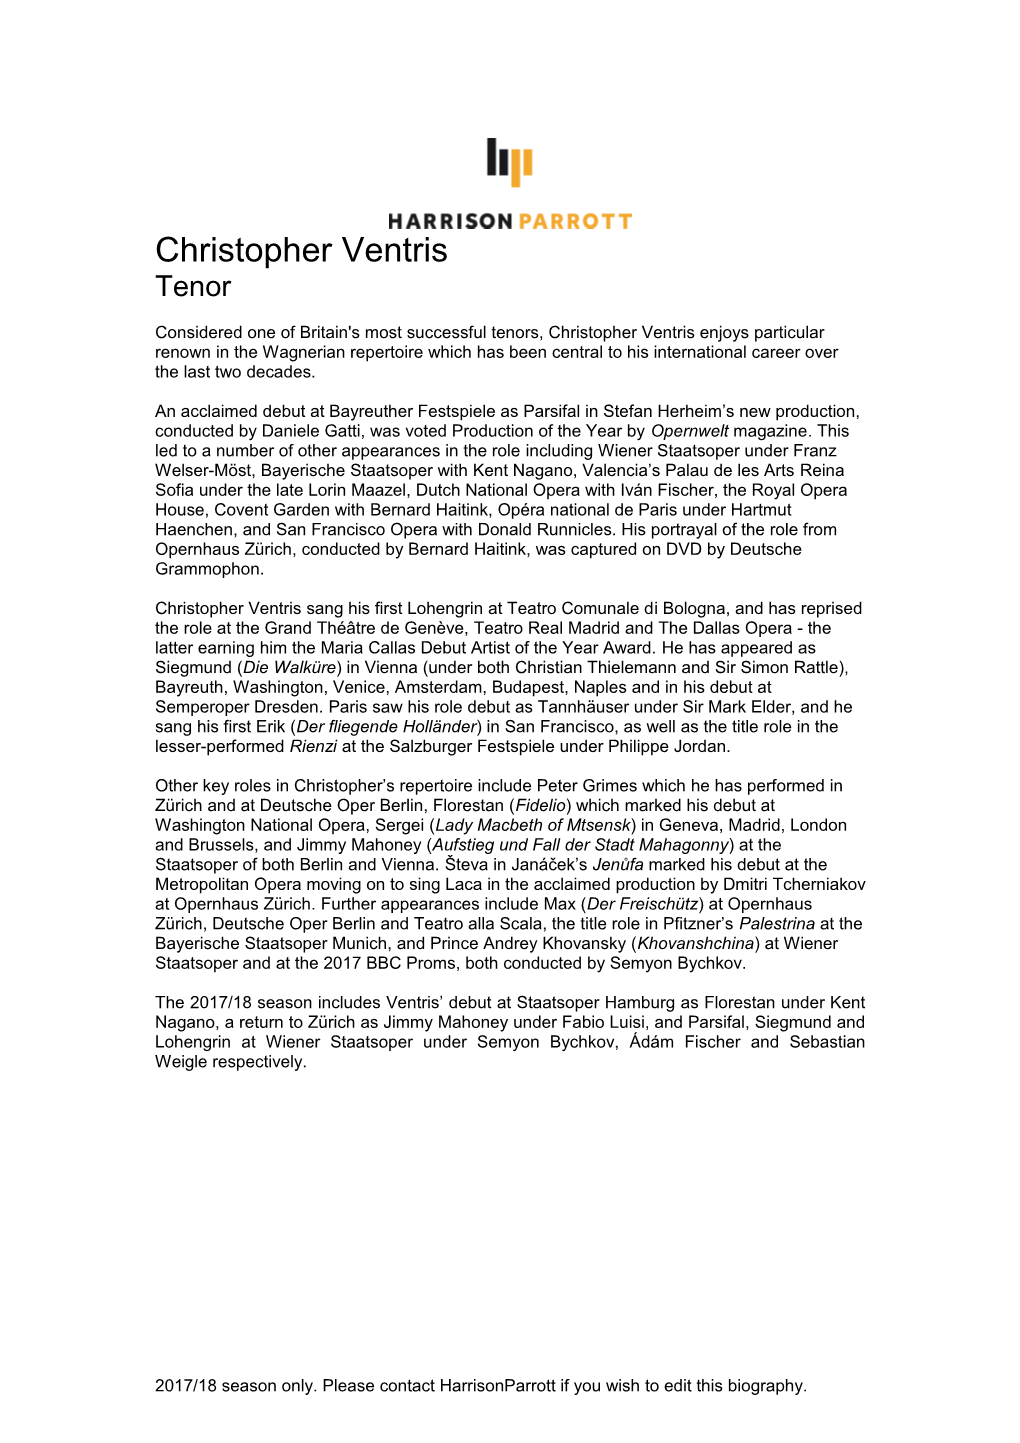 Christopher Ventris